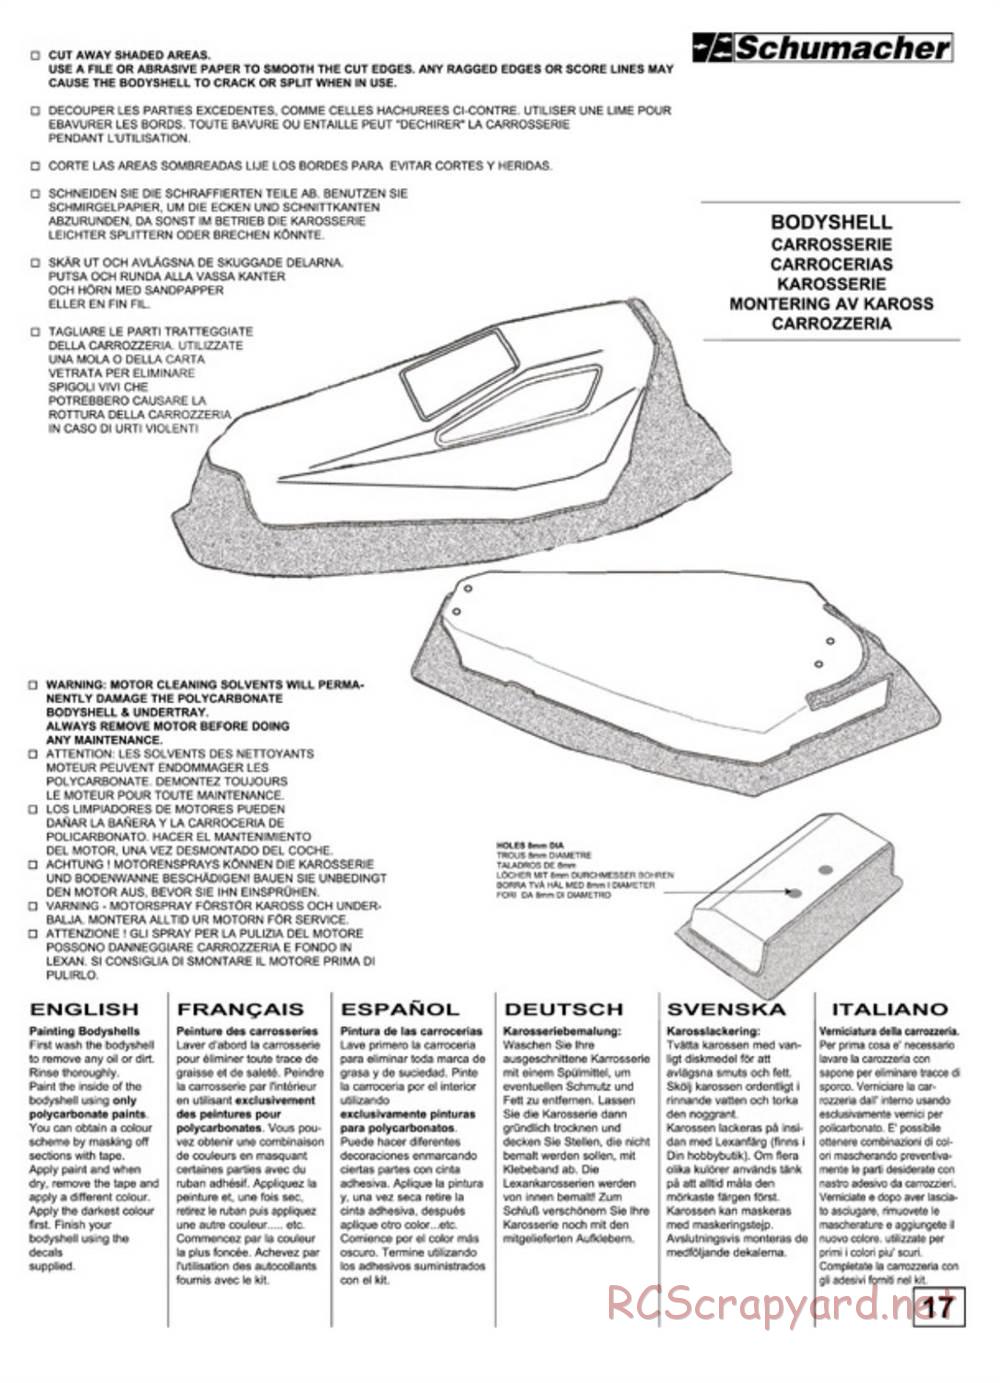 Schumacher - Fireblade Evo - Manual - Page 19